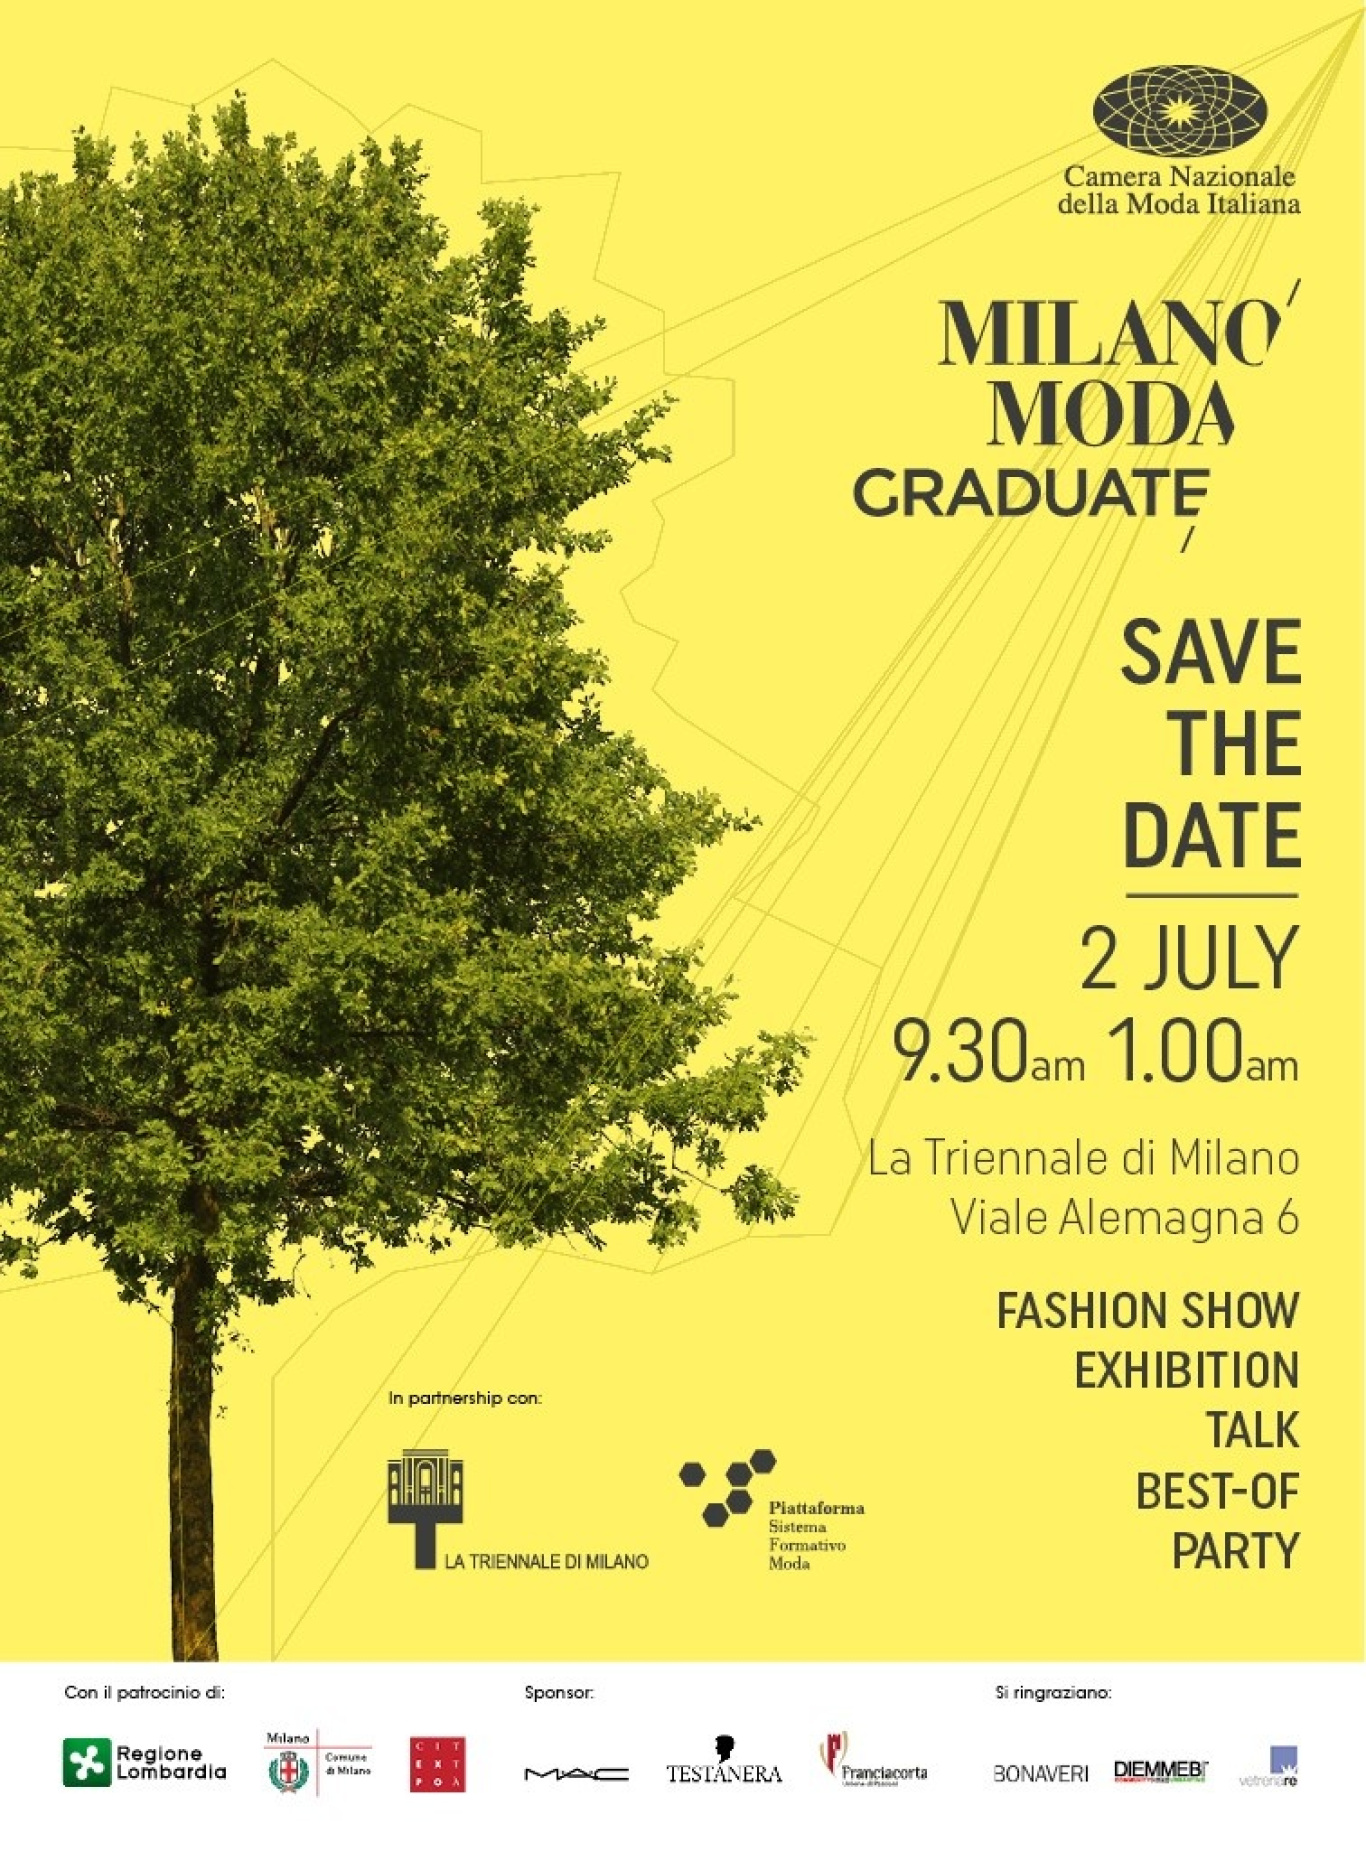 The first Milano Moda Graduate